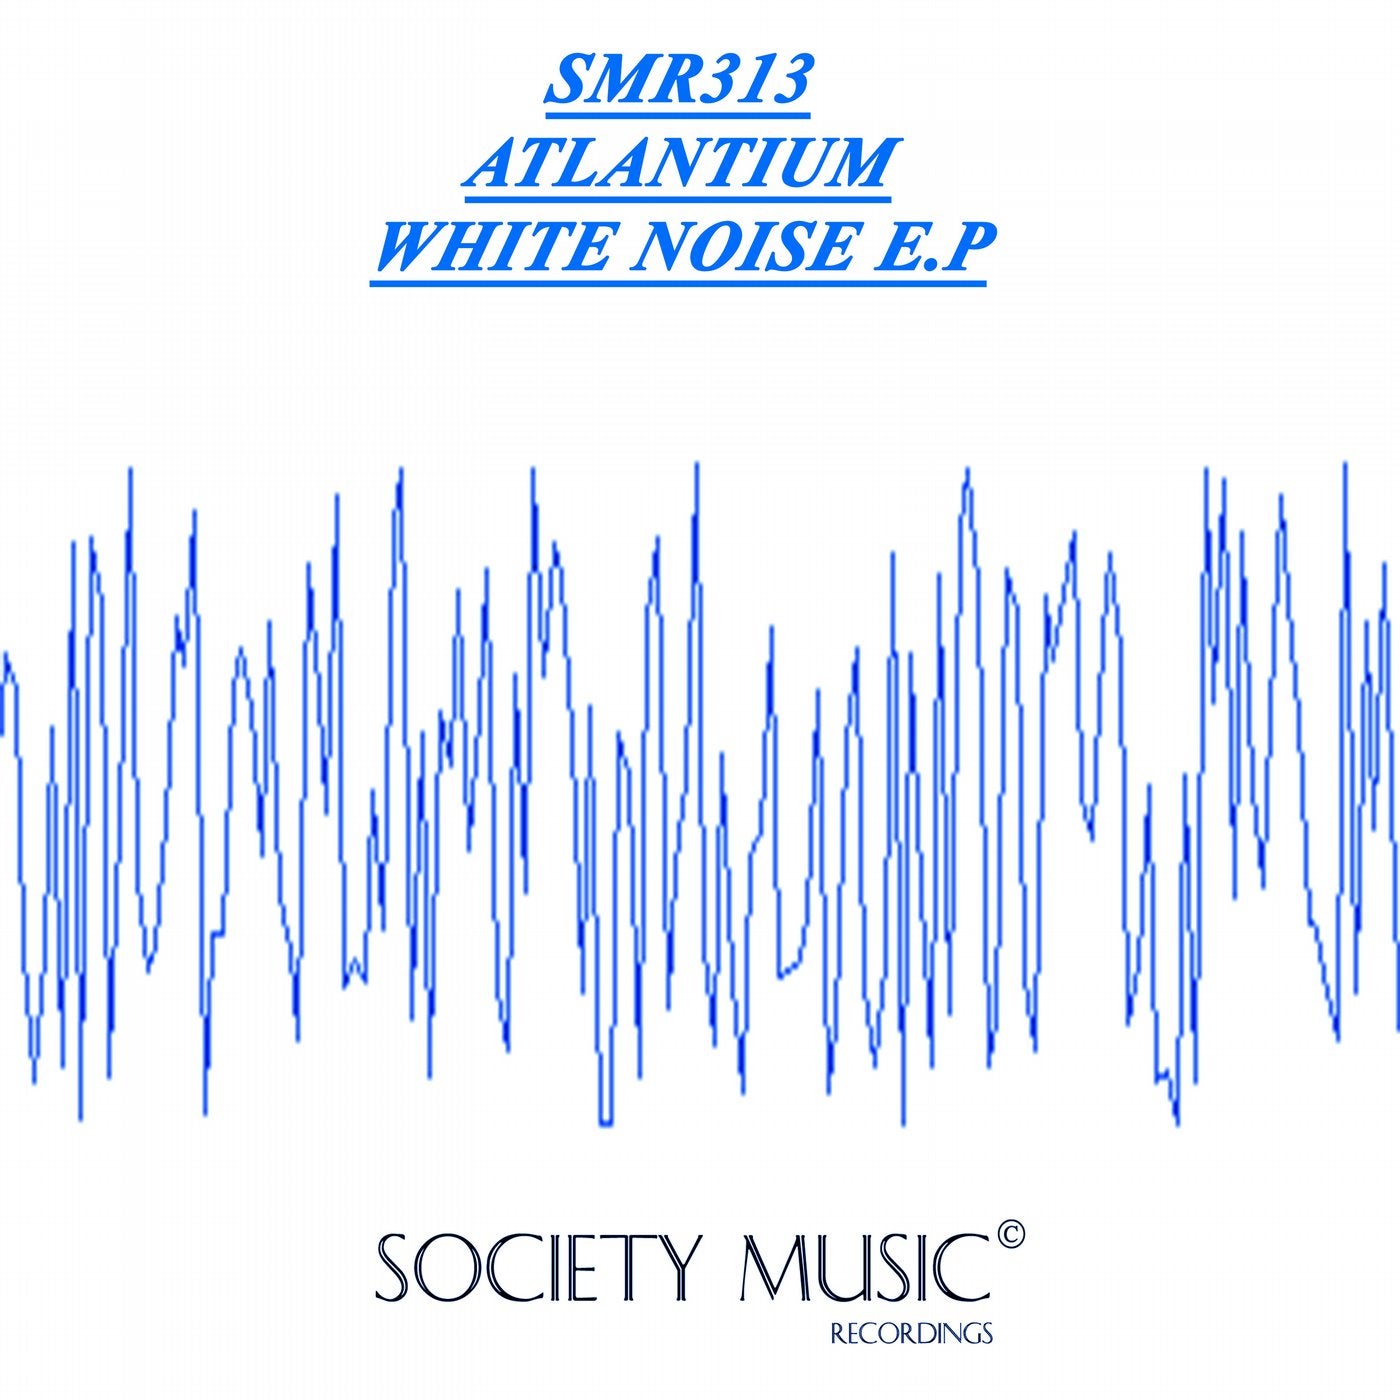 White Noise E.P